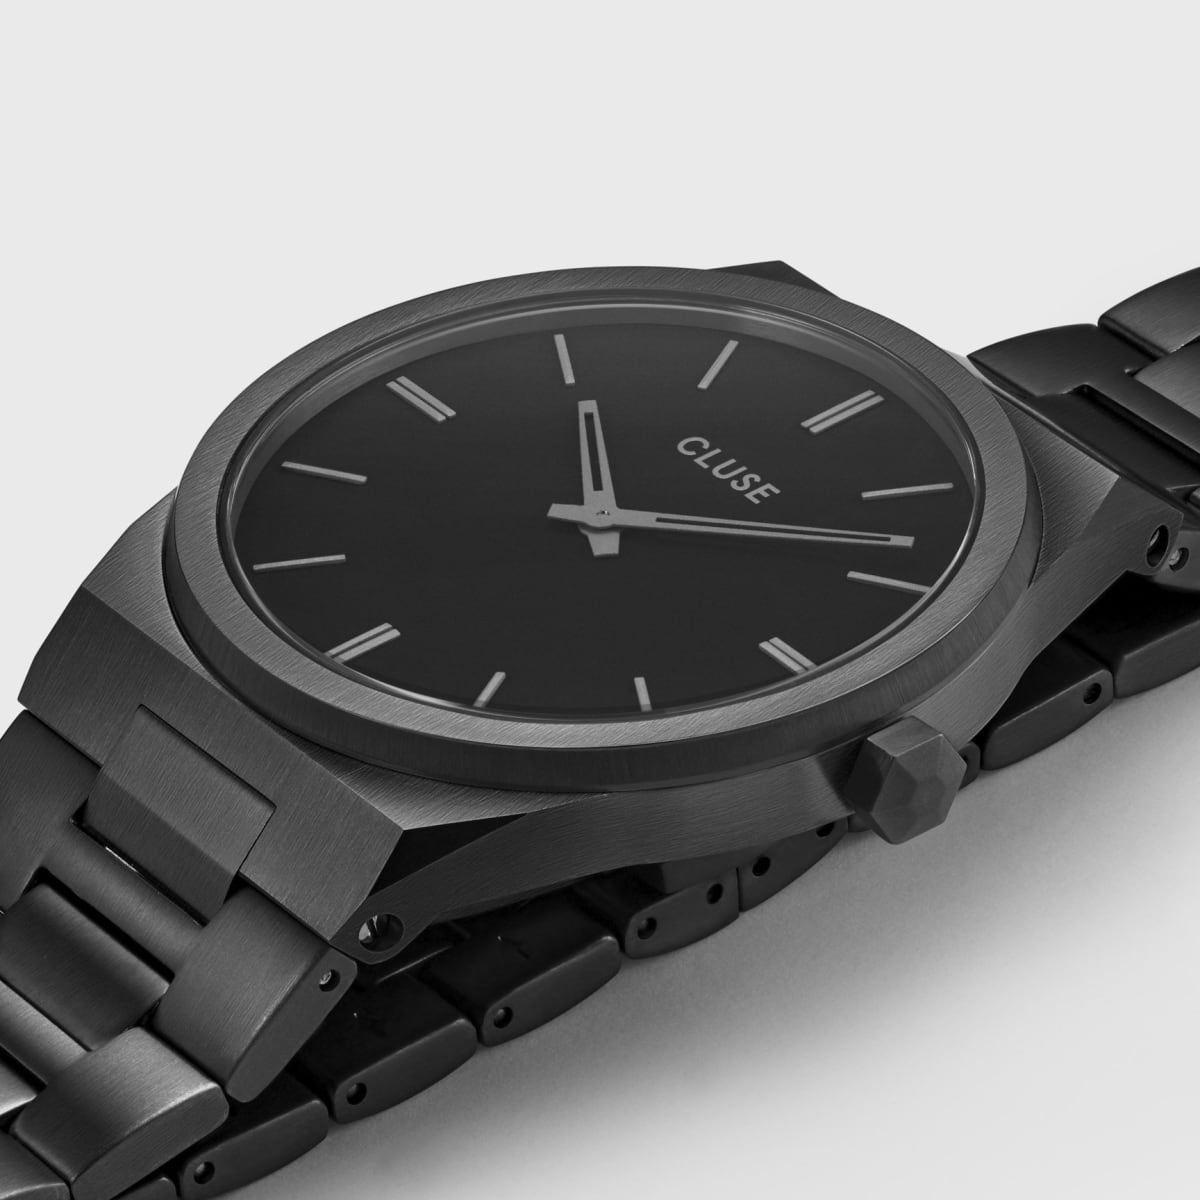 Cluse Vigoureux Watch in Black